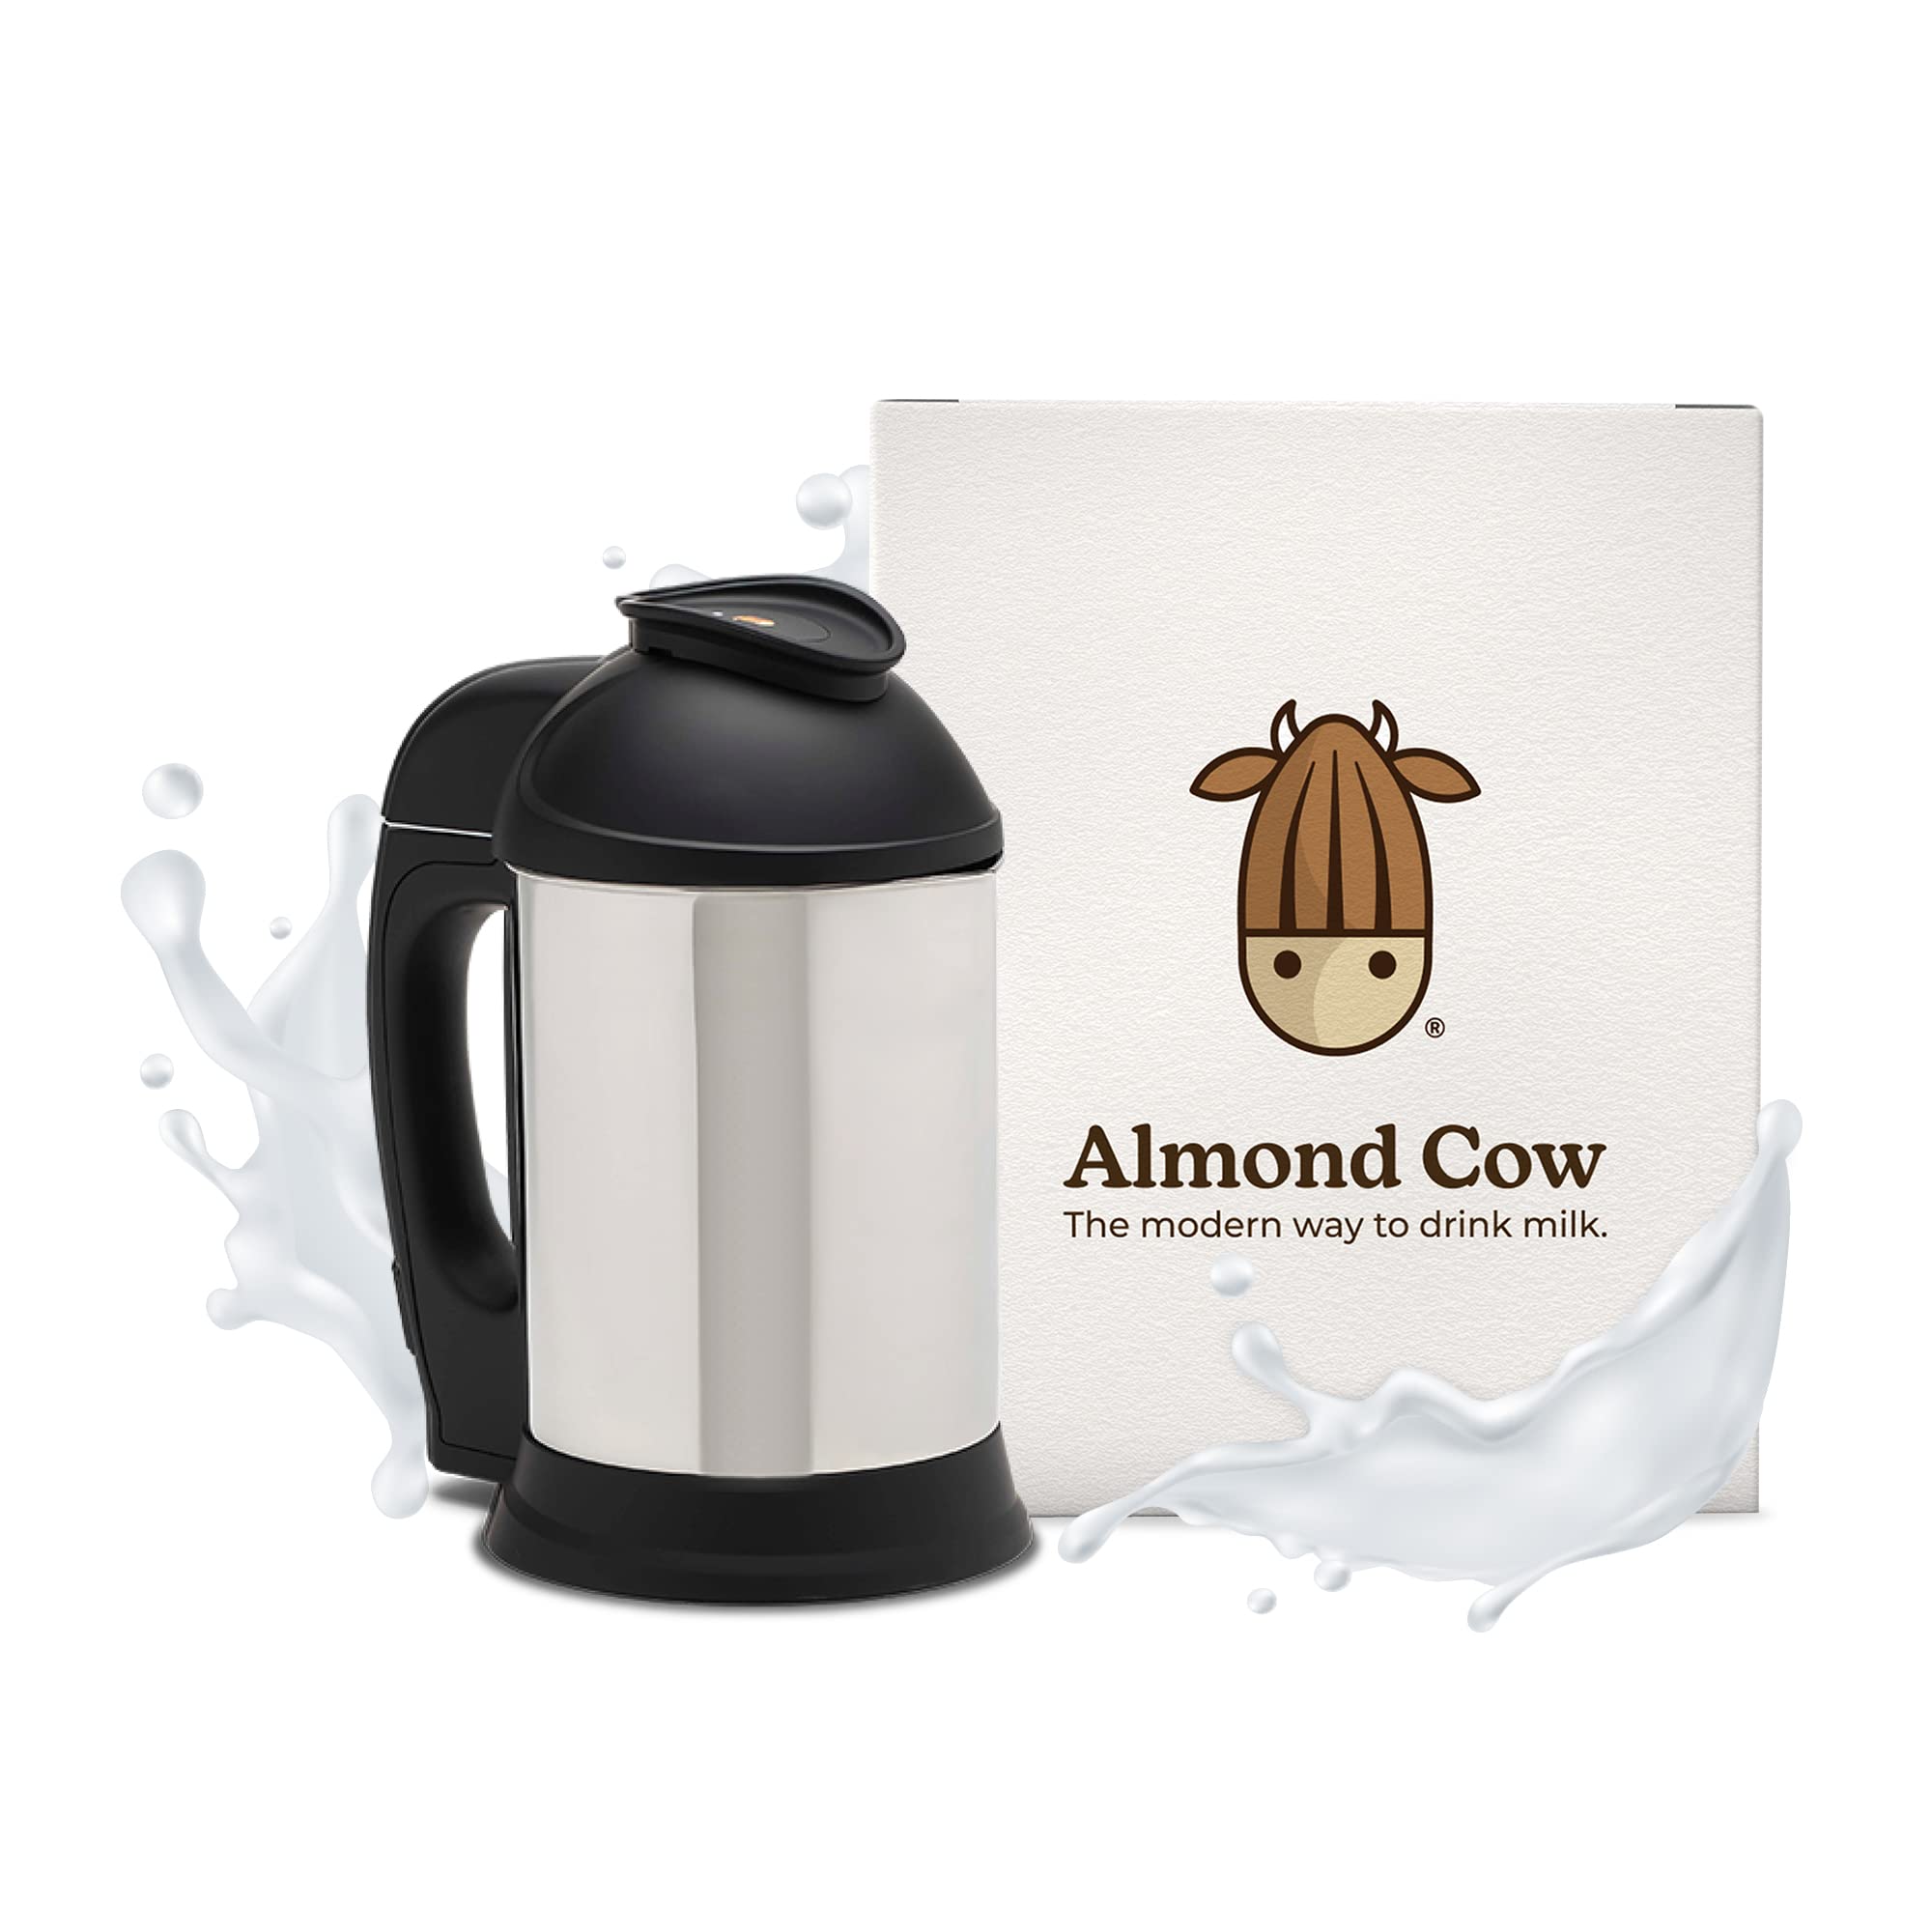 Almond cow coffee maker.